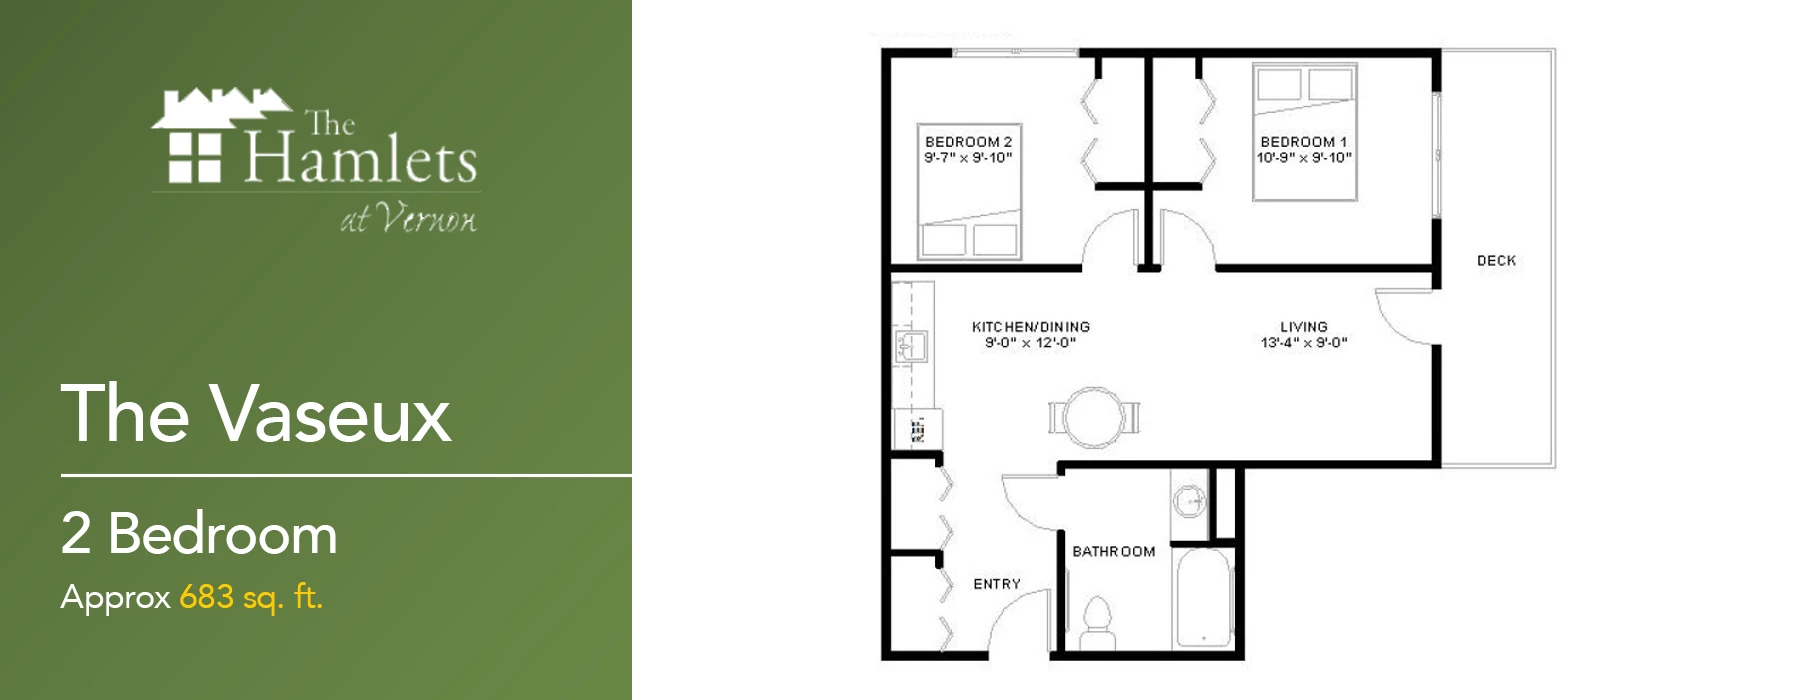 The Vaseux - 2 bedroom plan